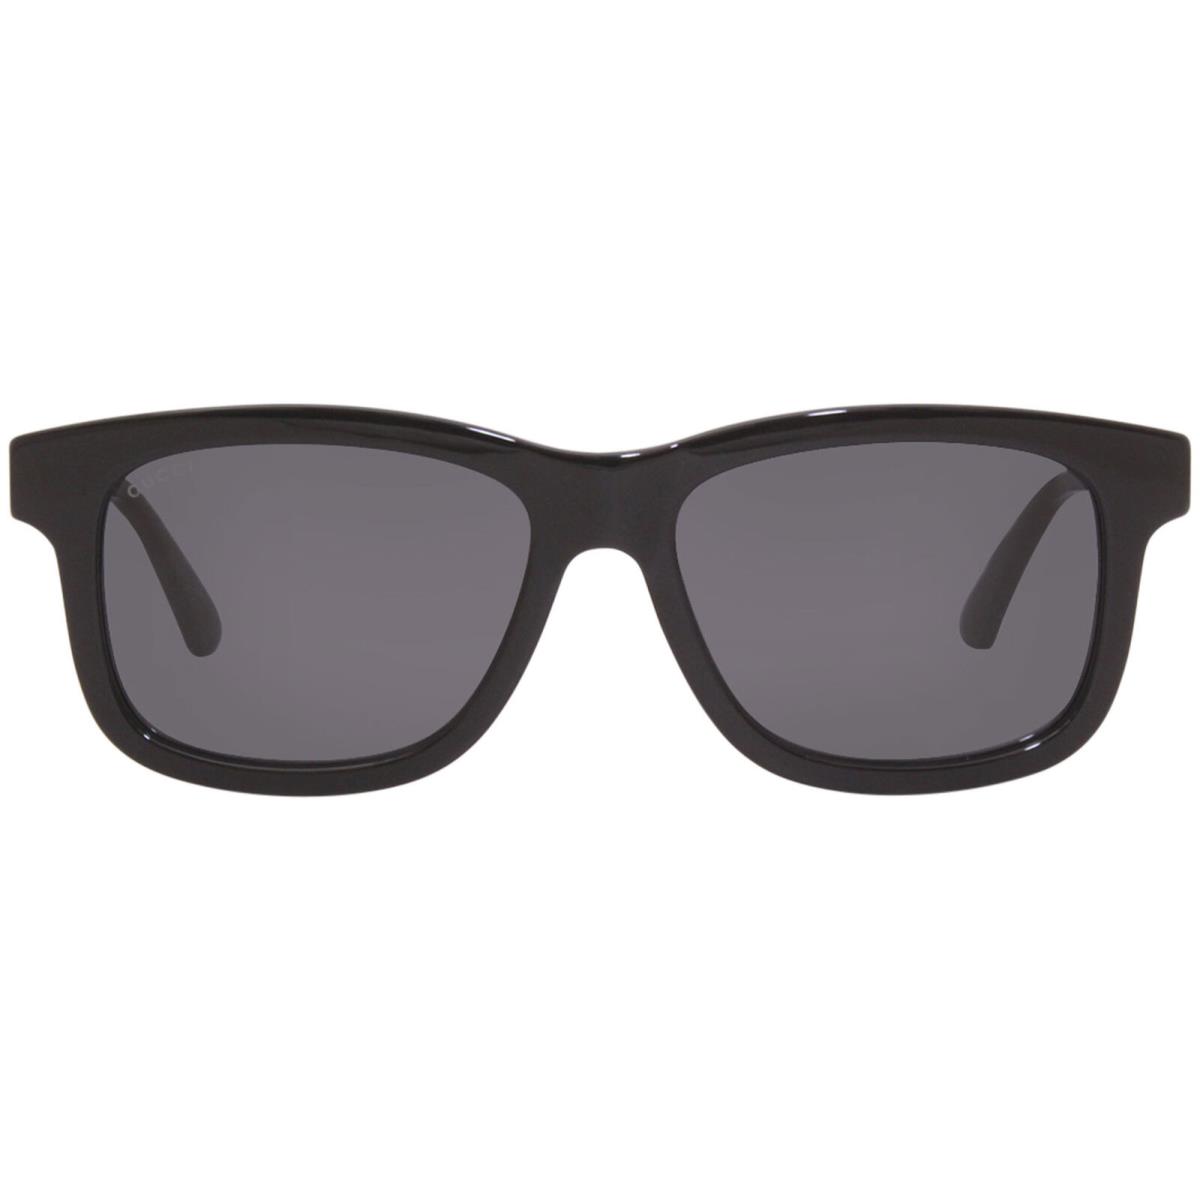 Gucci GG0824S 005 Sunglasses Men`s Black/grey Lenses Fashion Rectangular